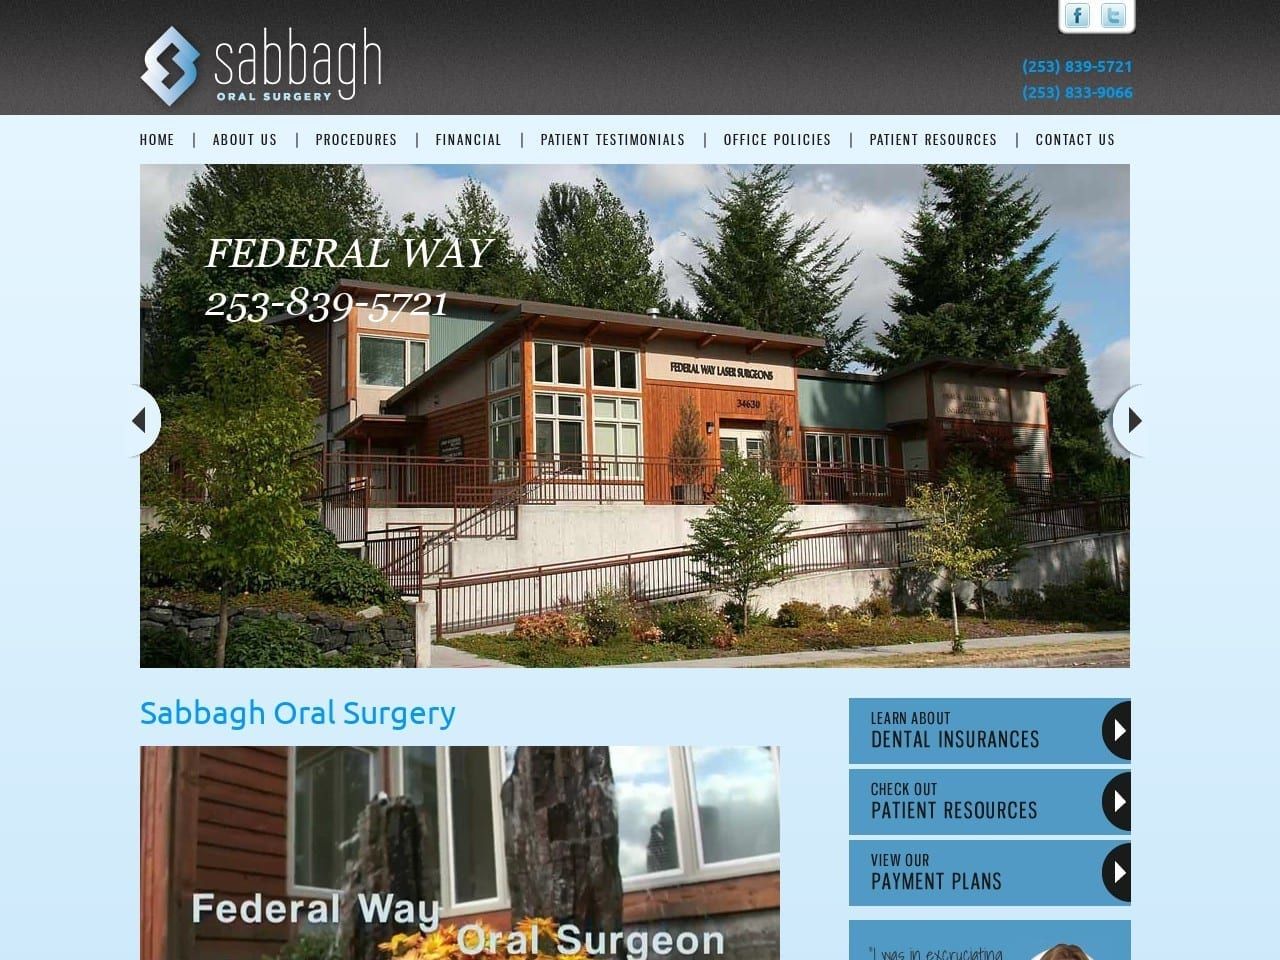 Federal Way Oral Dentist Website Screenshot from sabbaghoralsurgery.com